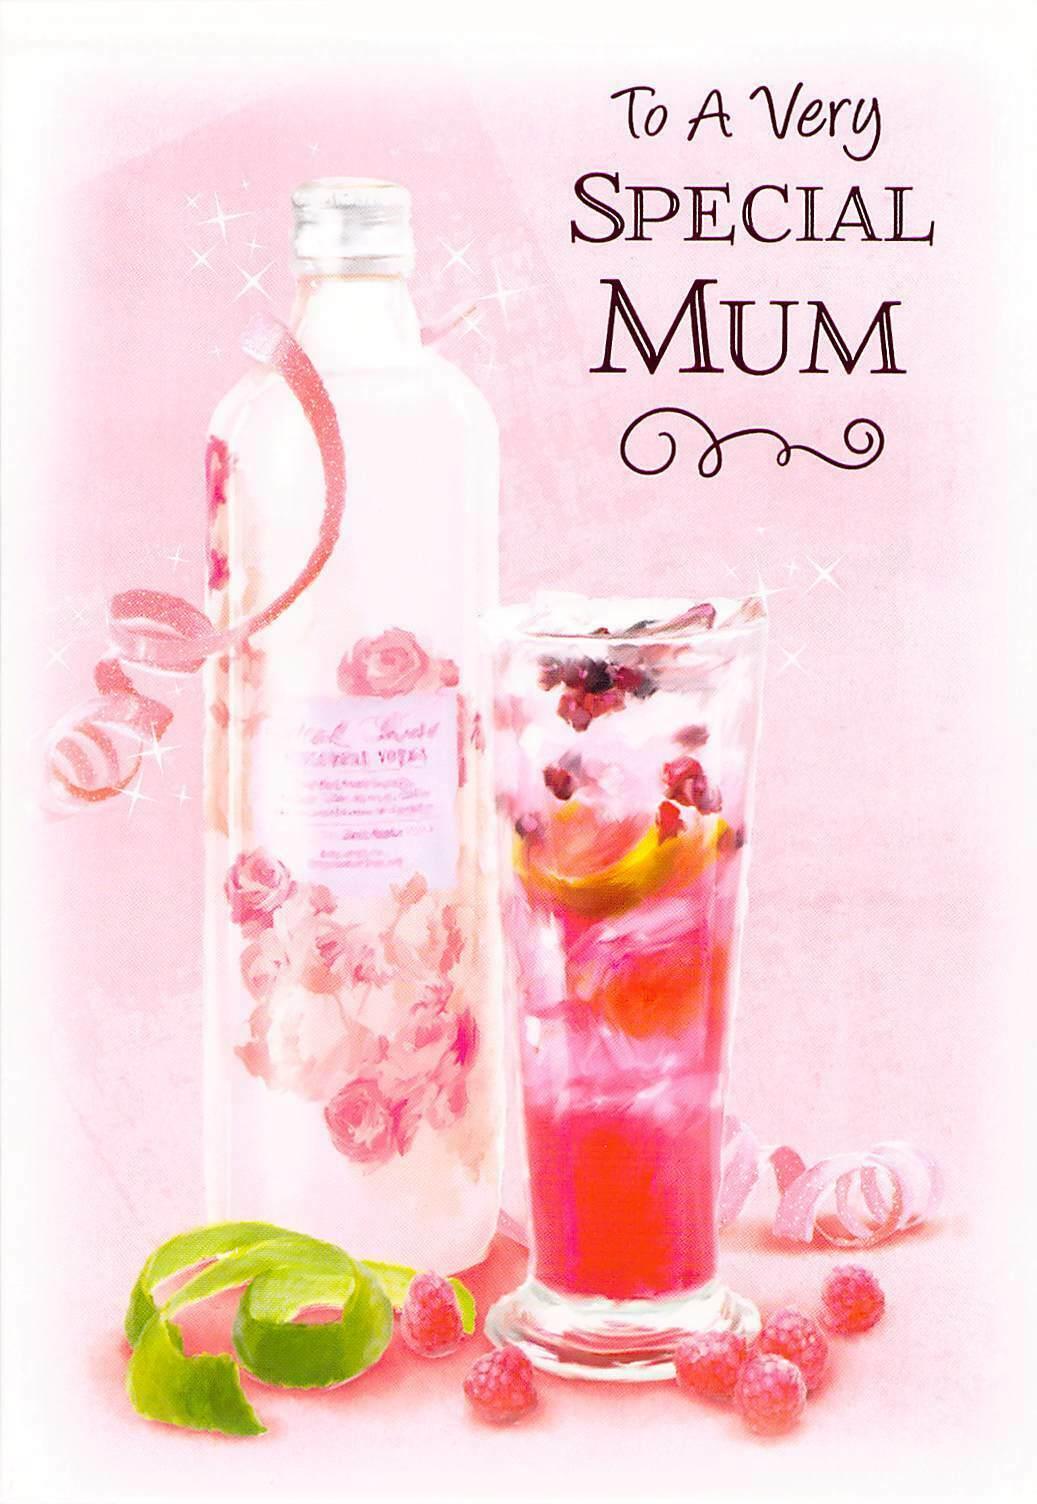 Mum Birthday Card - Greeting Card - Cocktail - Brand New